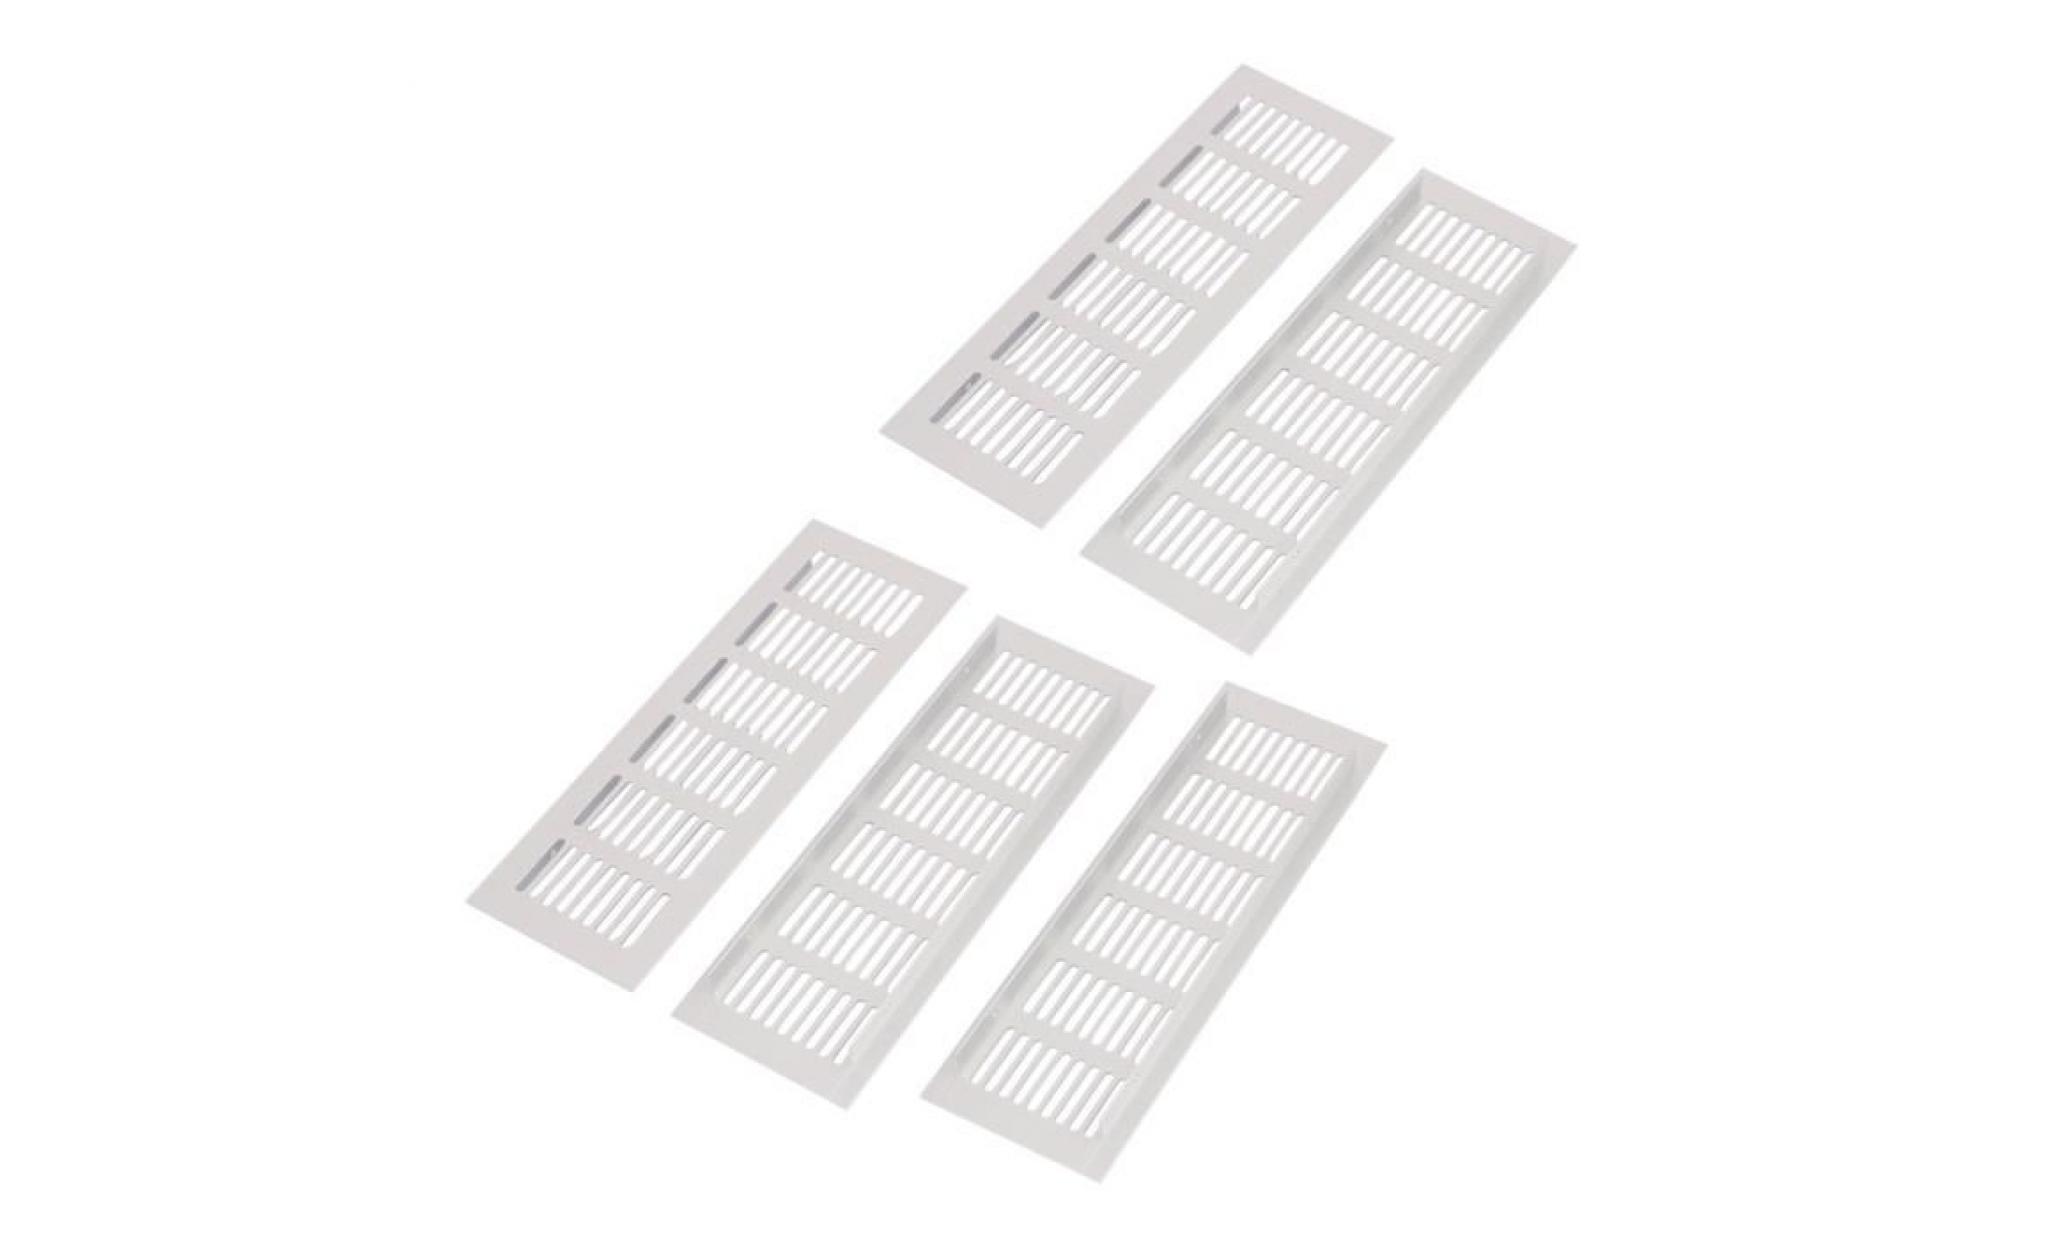 sourcingmap armoire cabinet alliage aluminium grille ventilation 225mmx80mmx15mm 4pcs